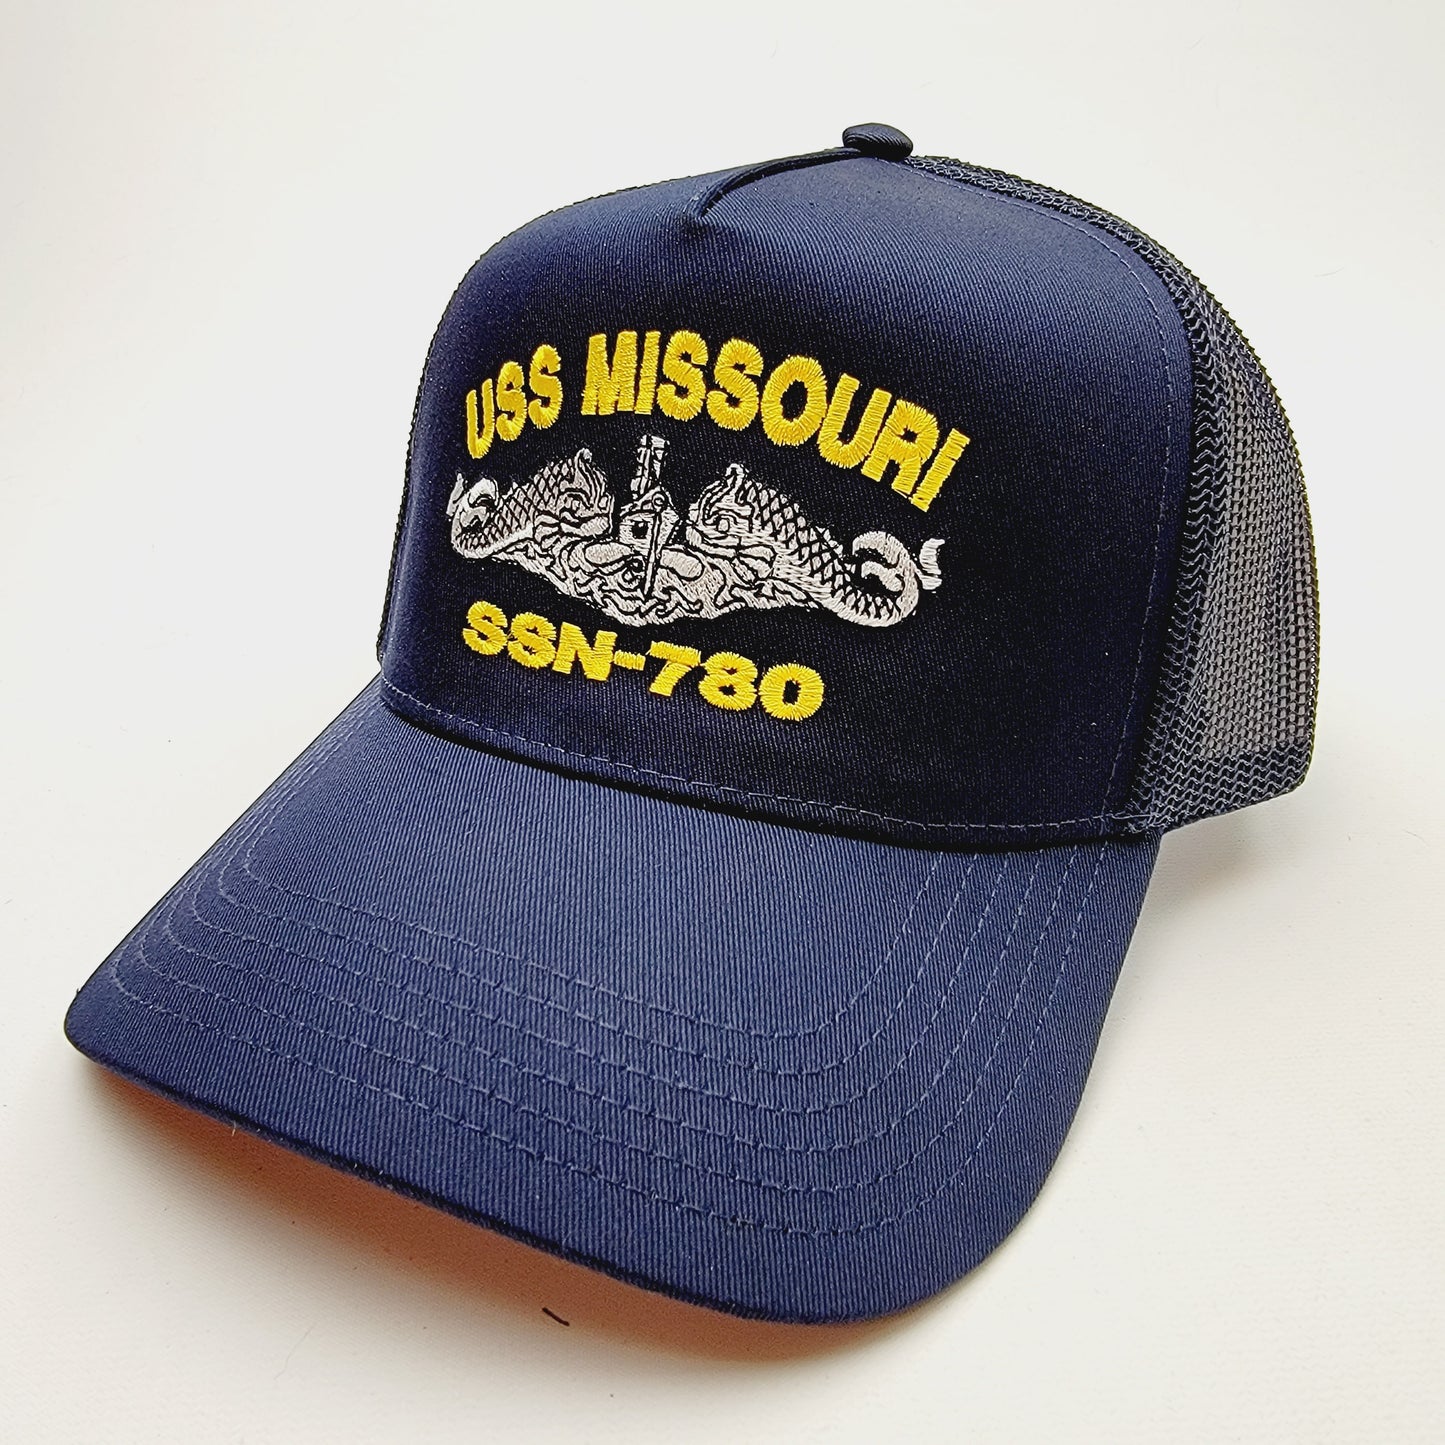 US NAVY USS MISSOURI SSN-780 Embroidered Hat Baseball Cap Adjustable Blue